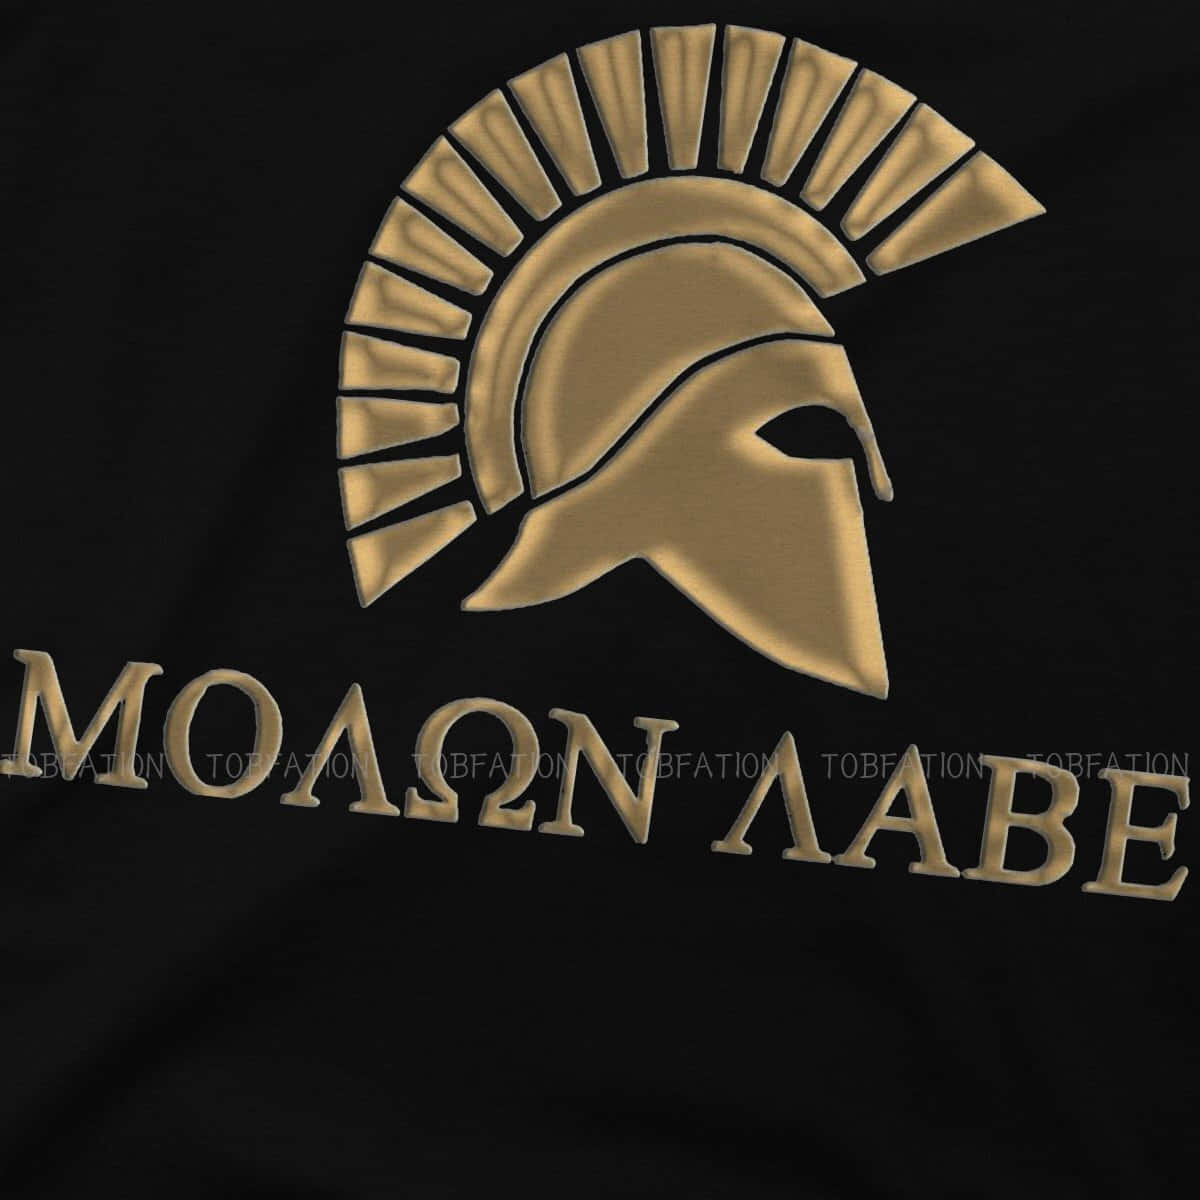 Download Moaon Abe - Gold Spartan Helmet T-shirt Wallpaper | Wallpapers.com